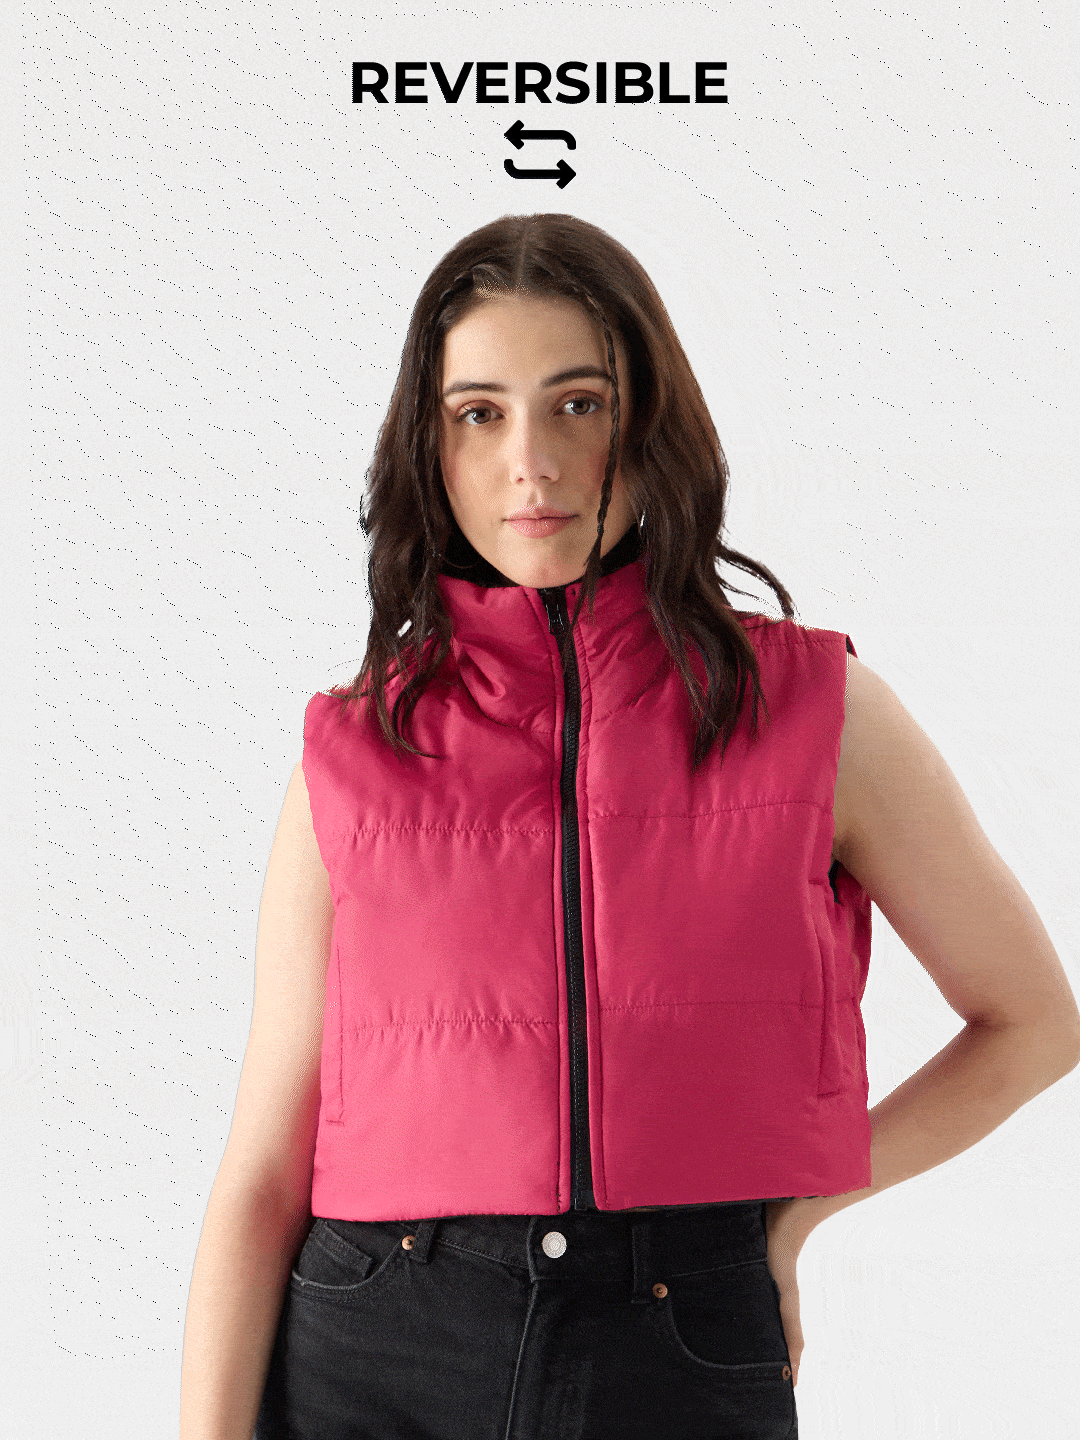 Women's Solids: Pink, Black (Reversible) Women's Puffer Jackets